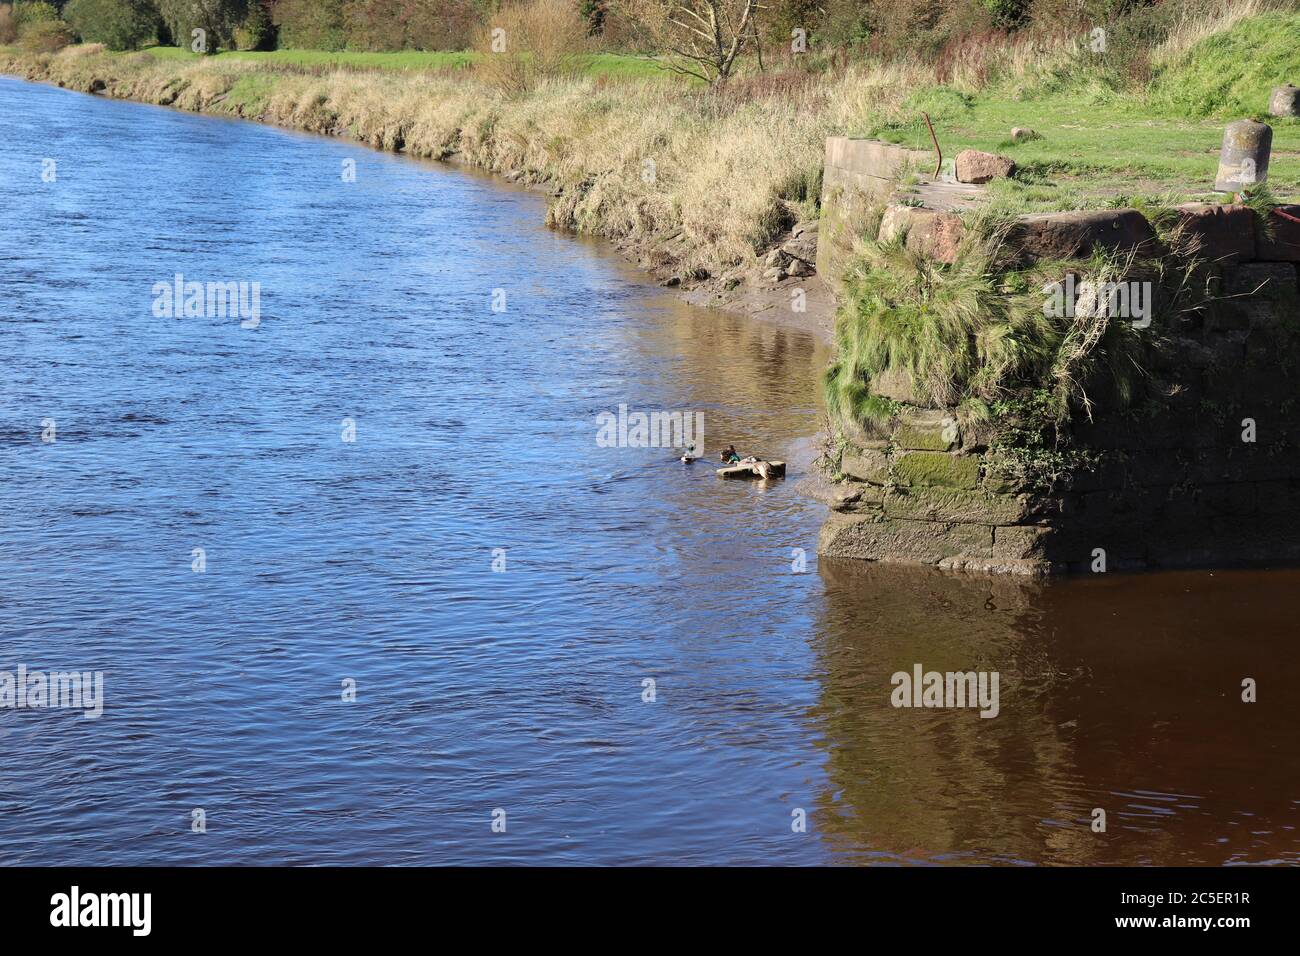 An Image of Mallard ducks swimming in a River near Dumfries, Scotland Stock Photo